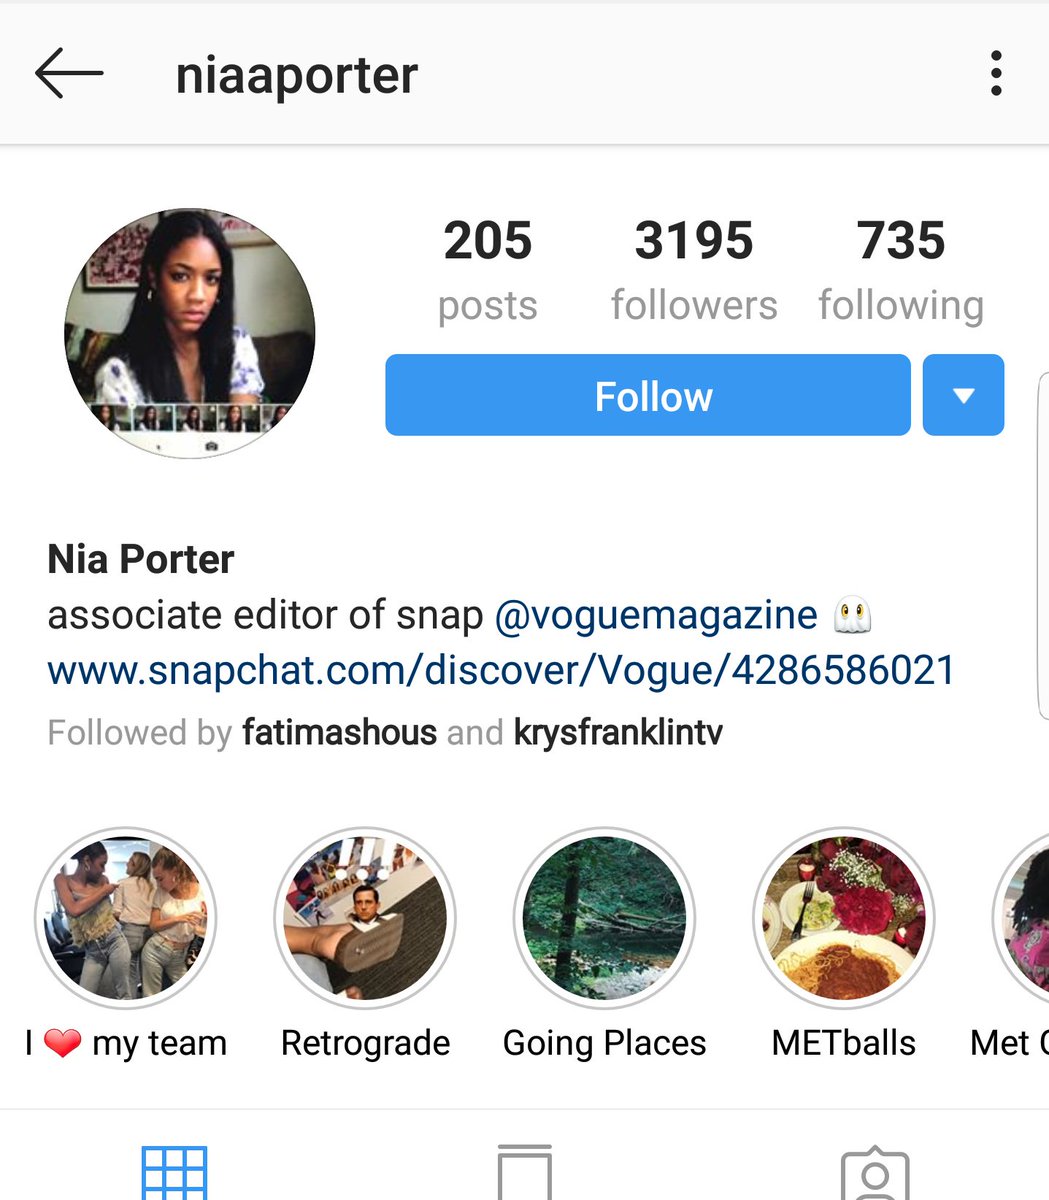 Nia PorterIG: NiaaporterAssociate editor of Vouge Magazine's Snapchat